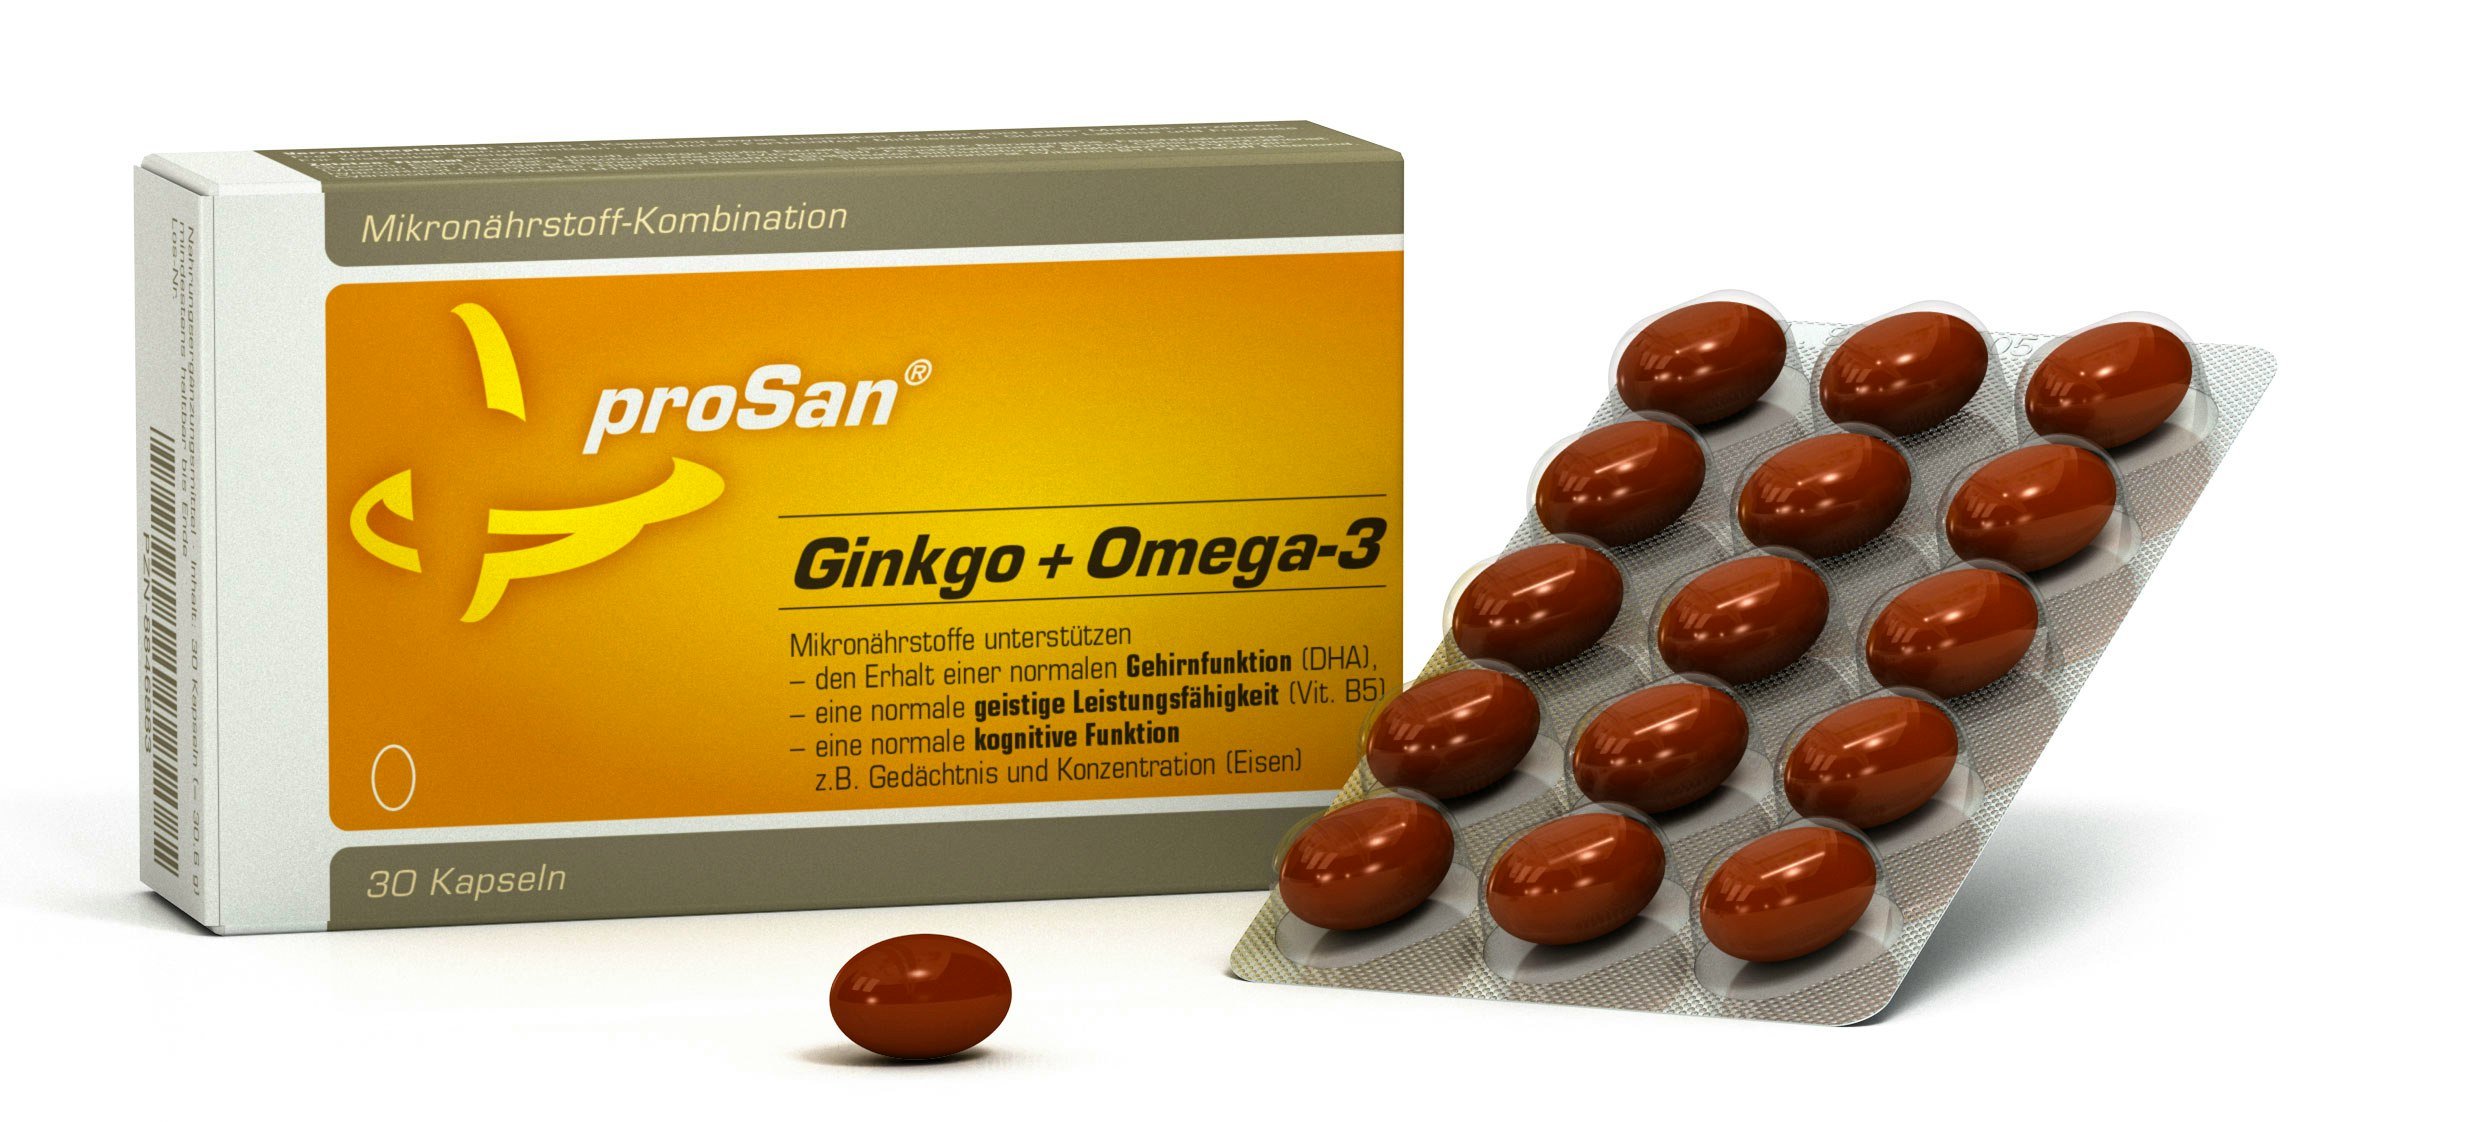 proSan Ginkgo+Omega-3 (30 Kapseln)